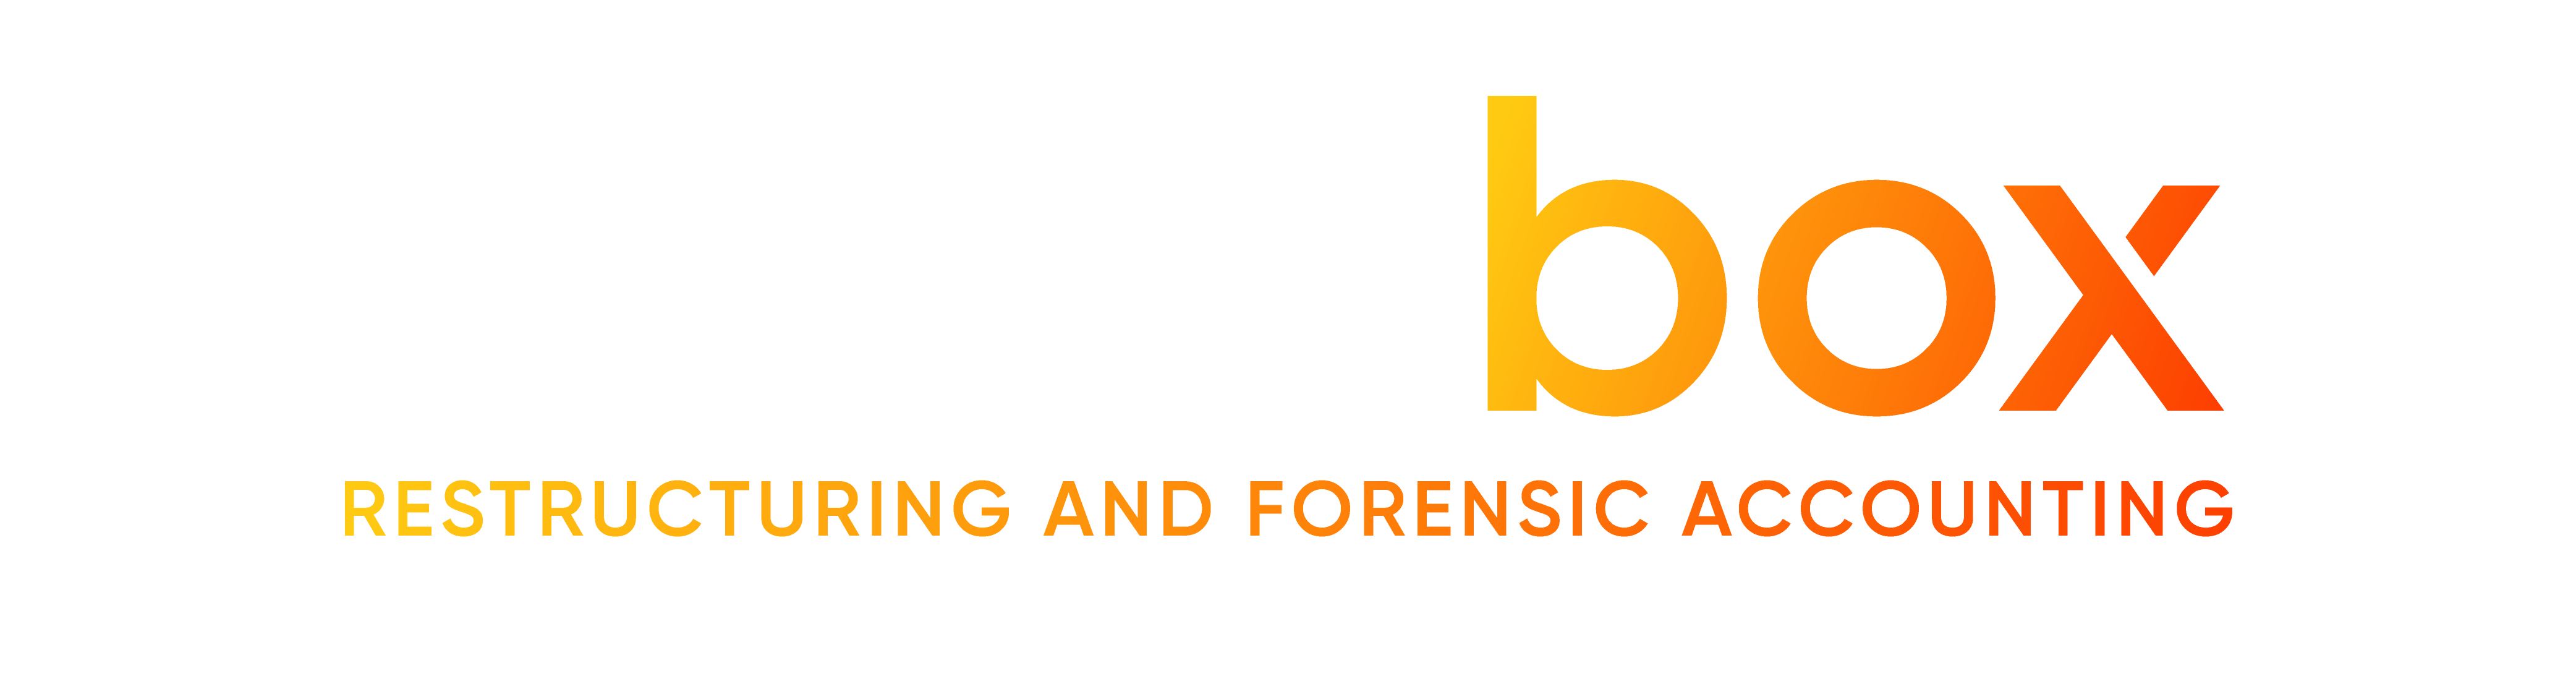 BlackBox mobile logo